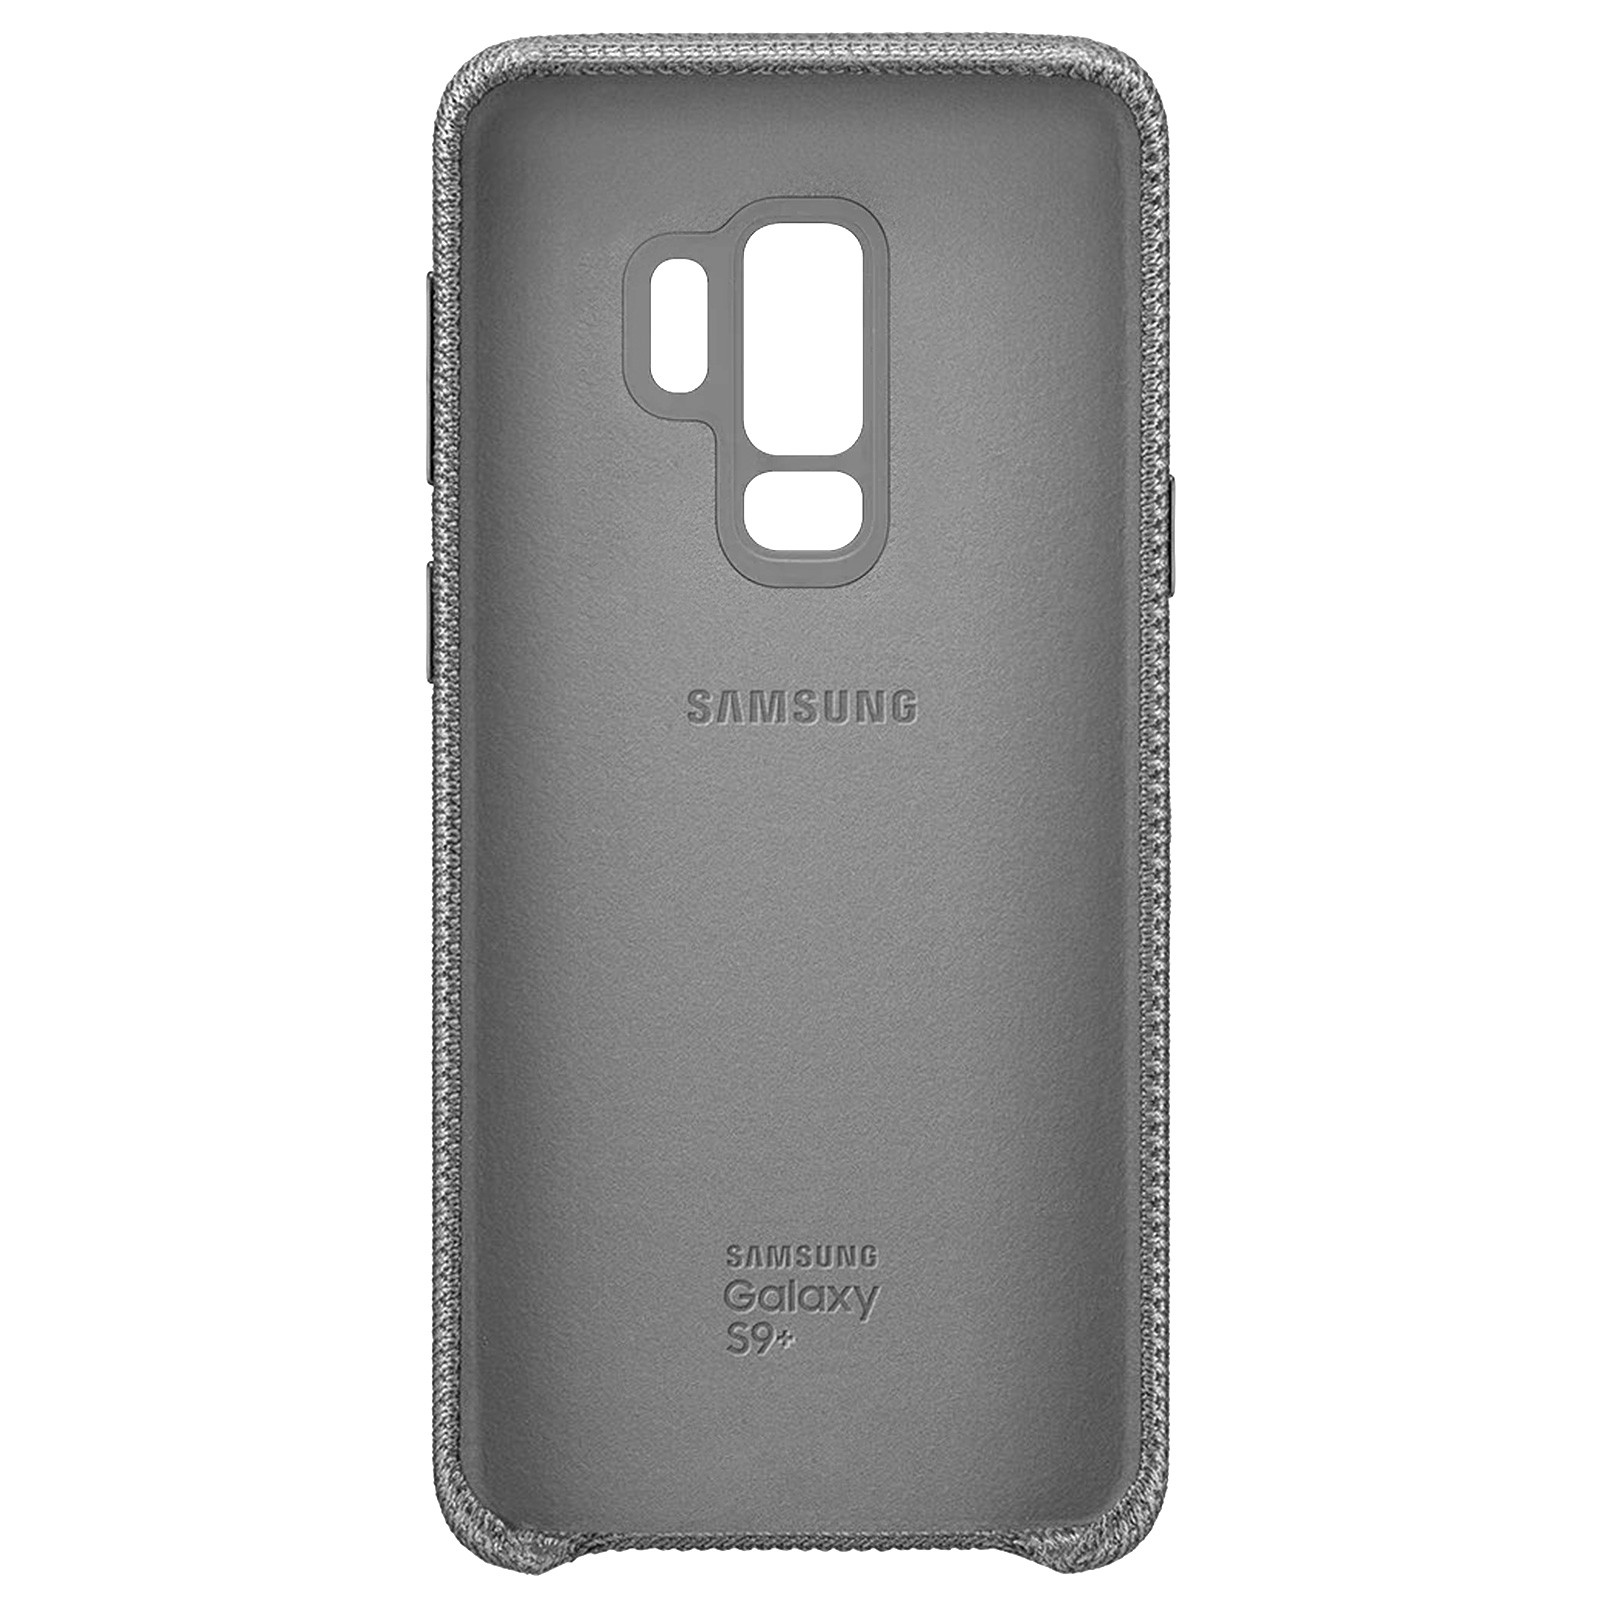 SAMSUNG EF-GG965FJ Series, Reisekoffer, S9 Samsung, Grau Galaxy Plus